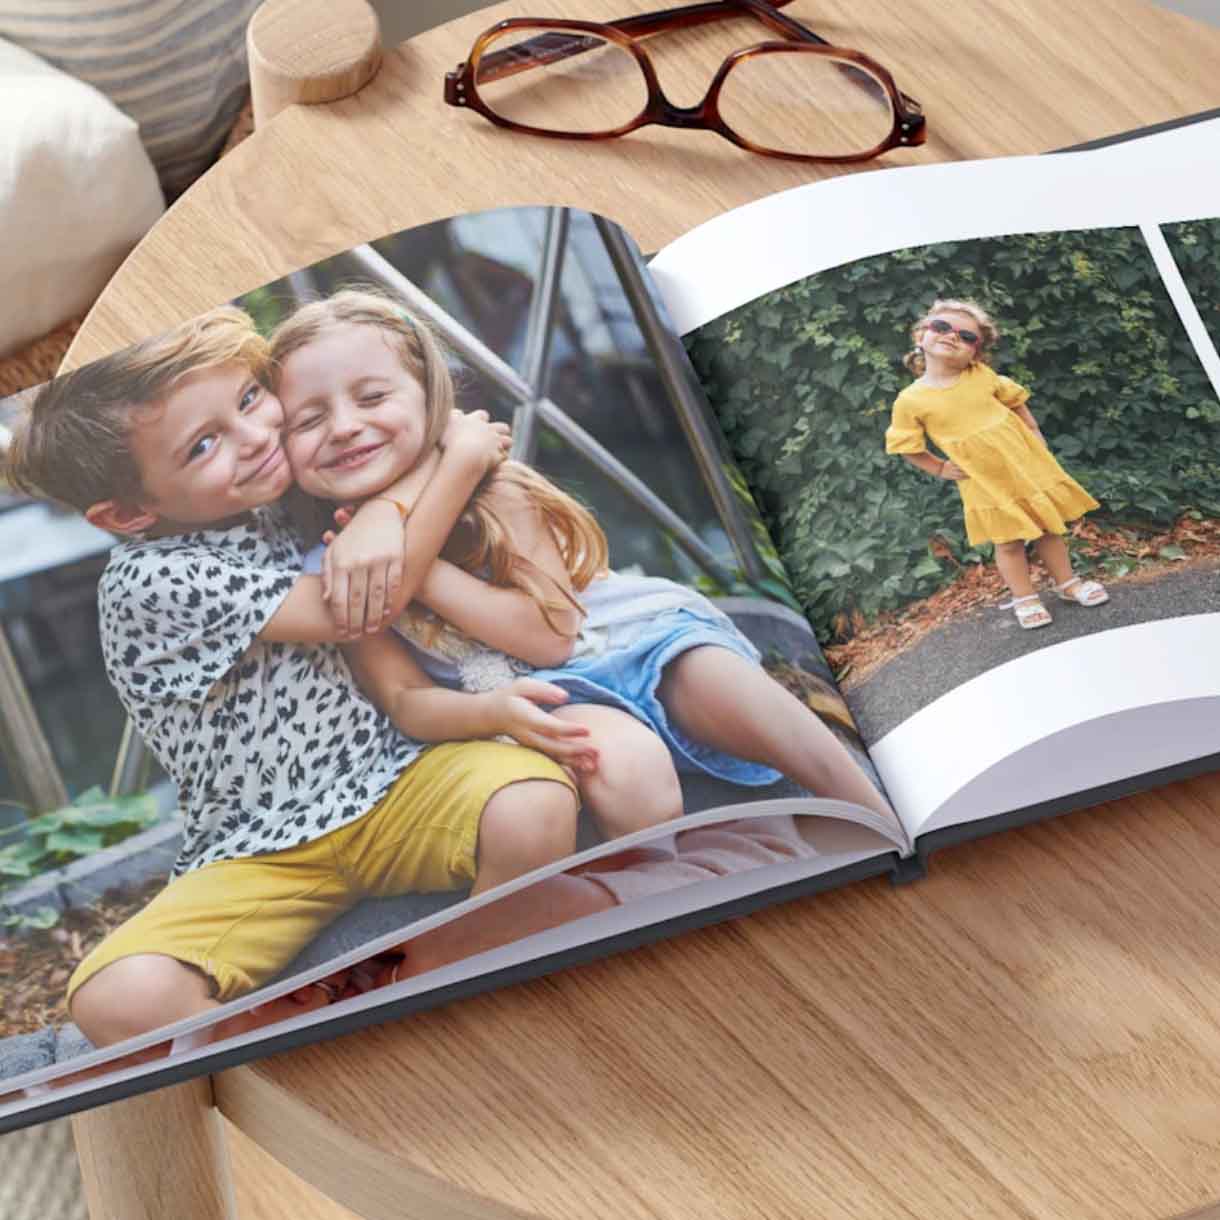 Custom Photo Books